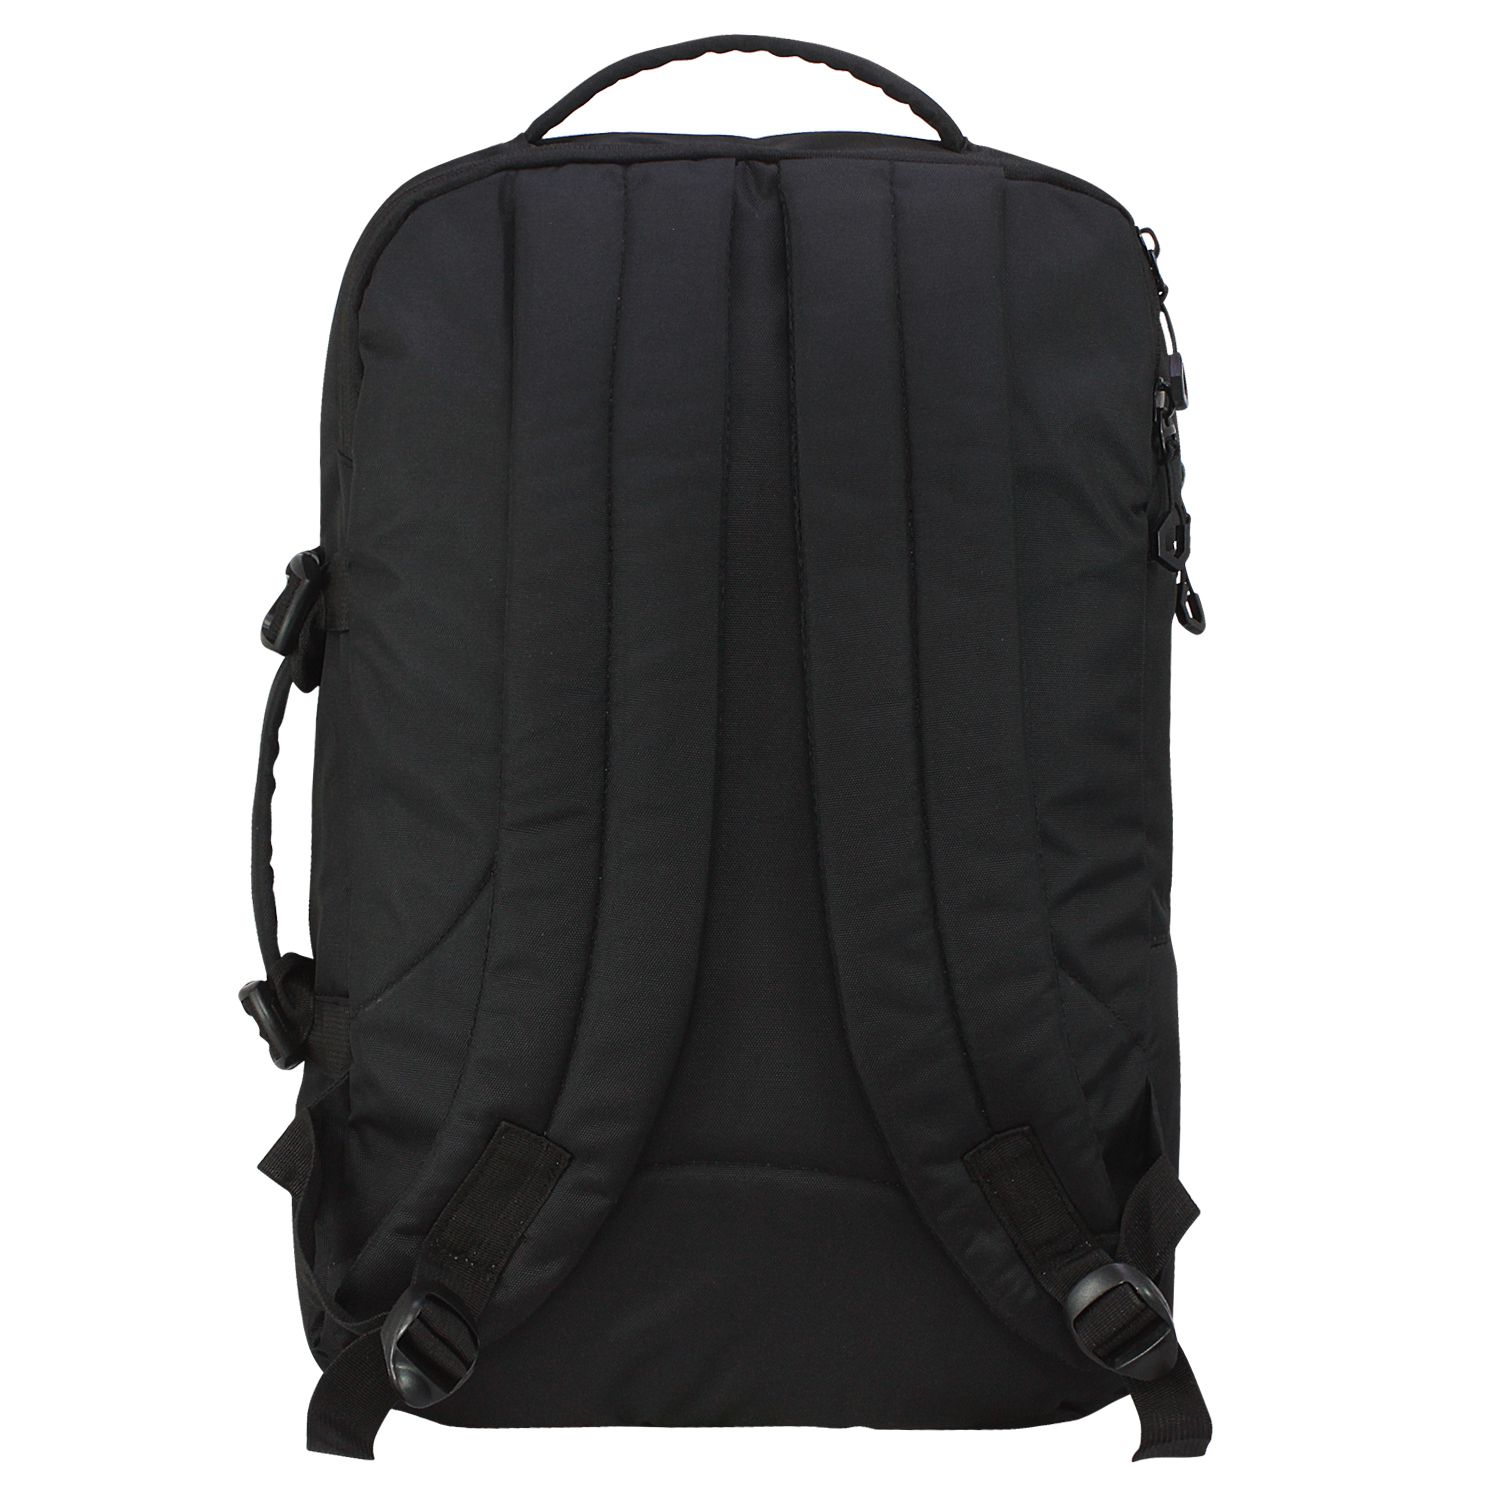 Urban Tribe Black Backpack - Buy Urban Tribe Black Backpack Online at ...